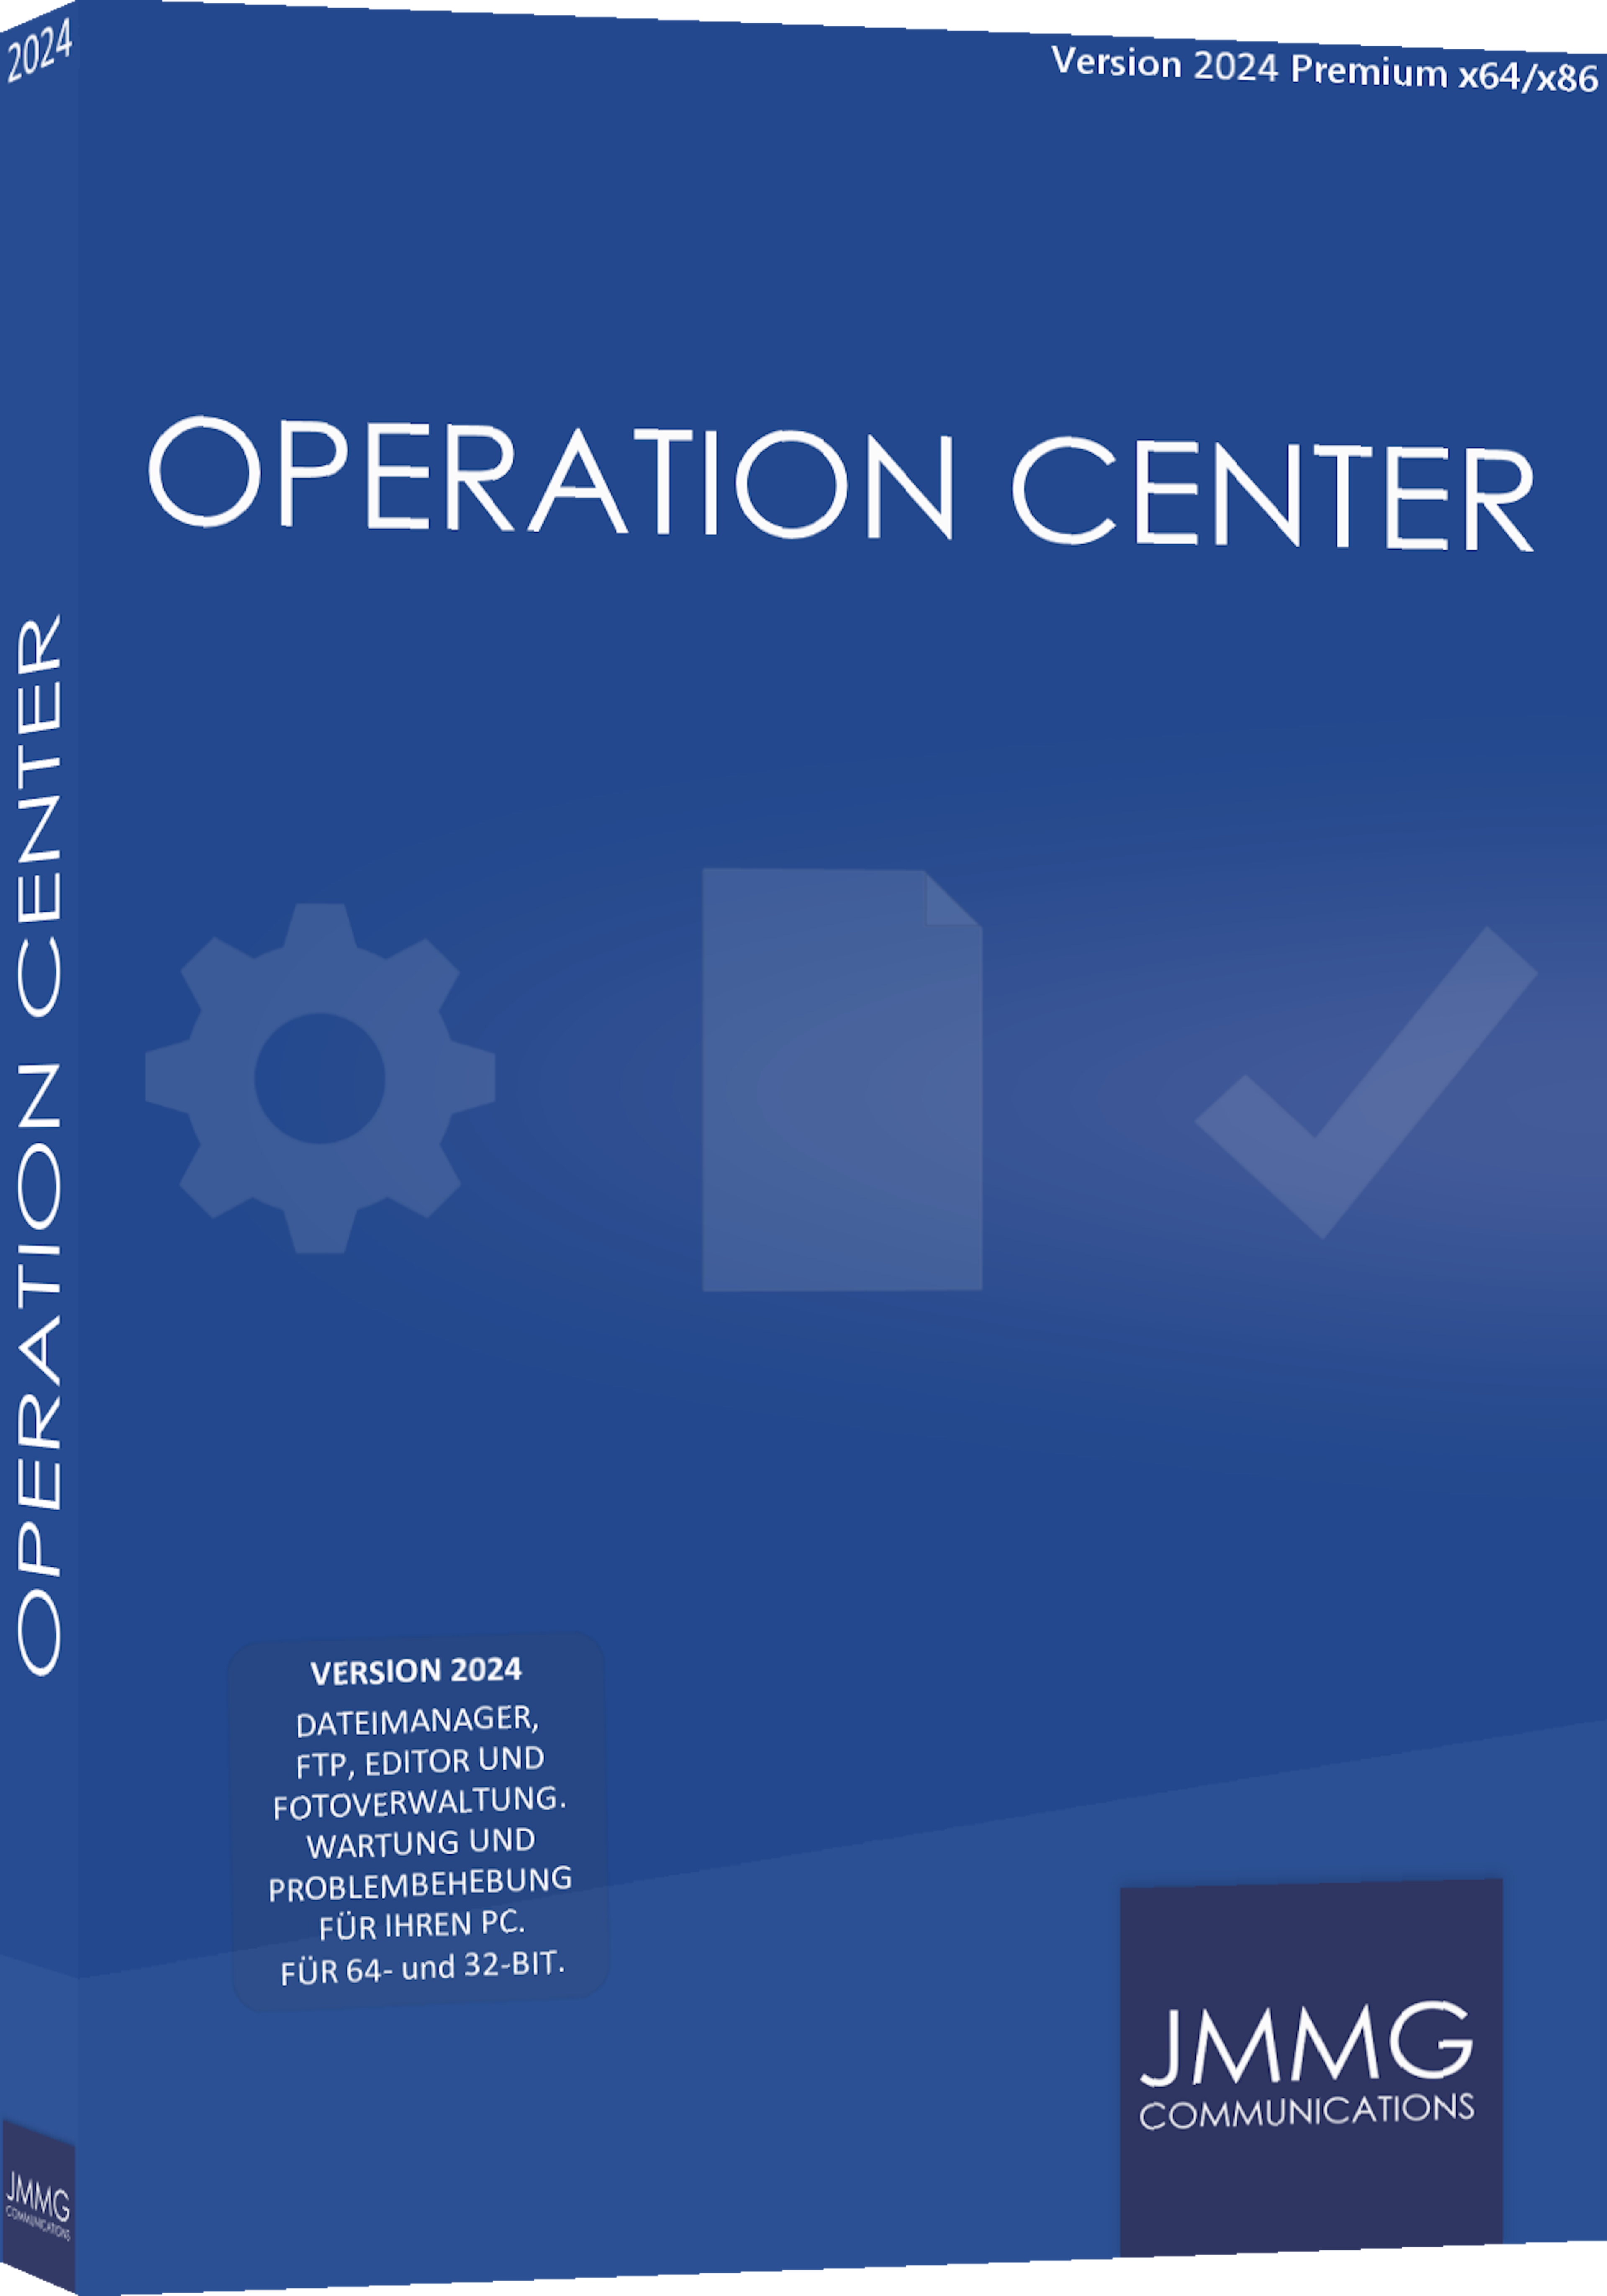 Operation Center Logo